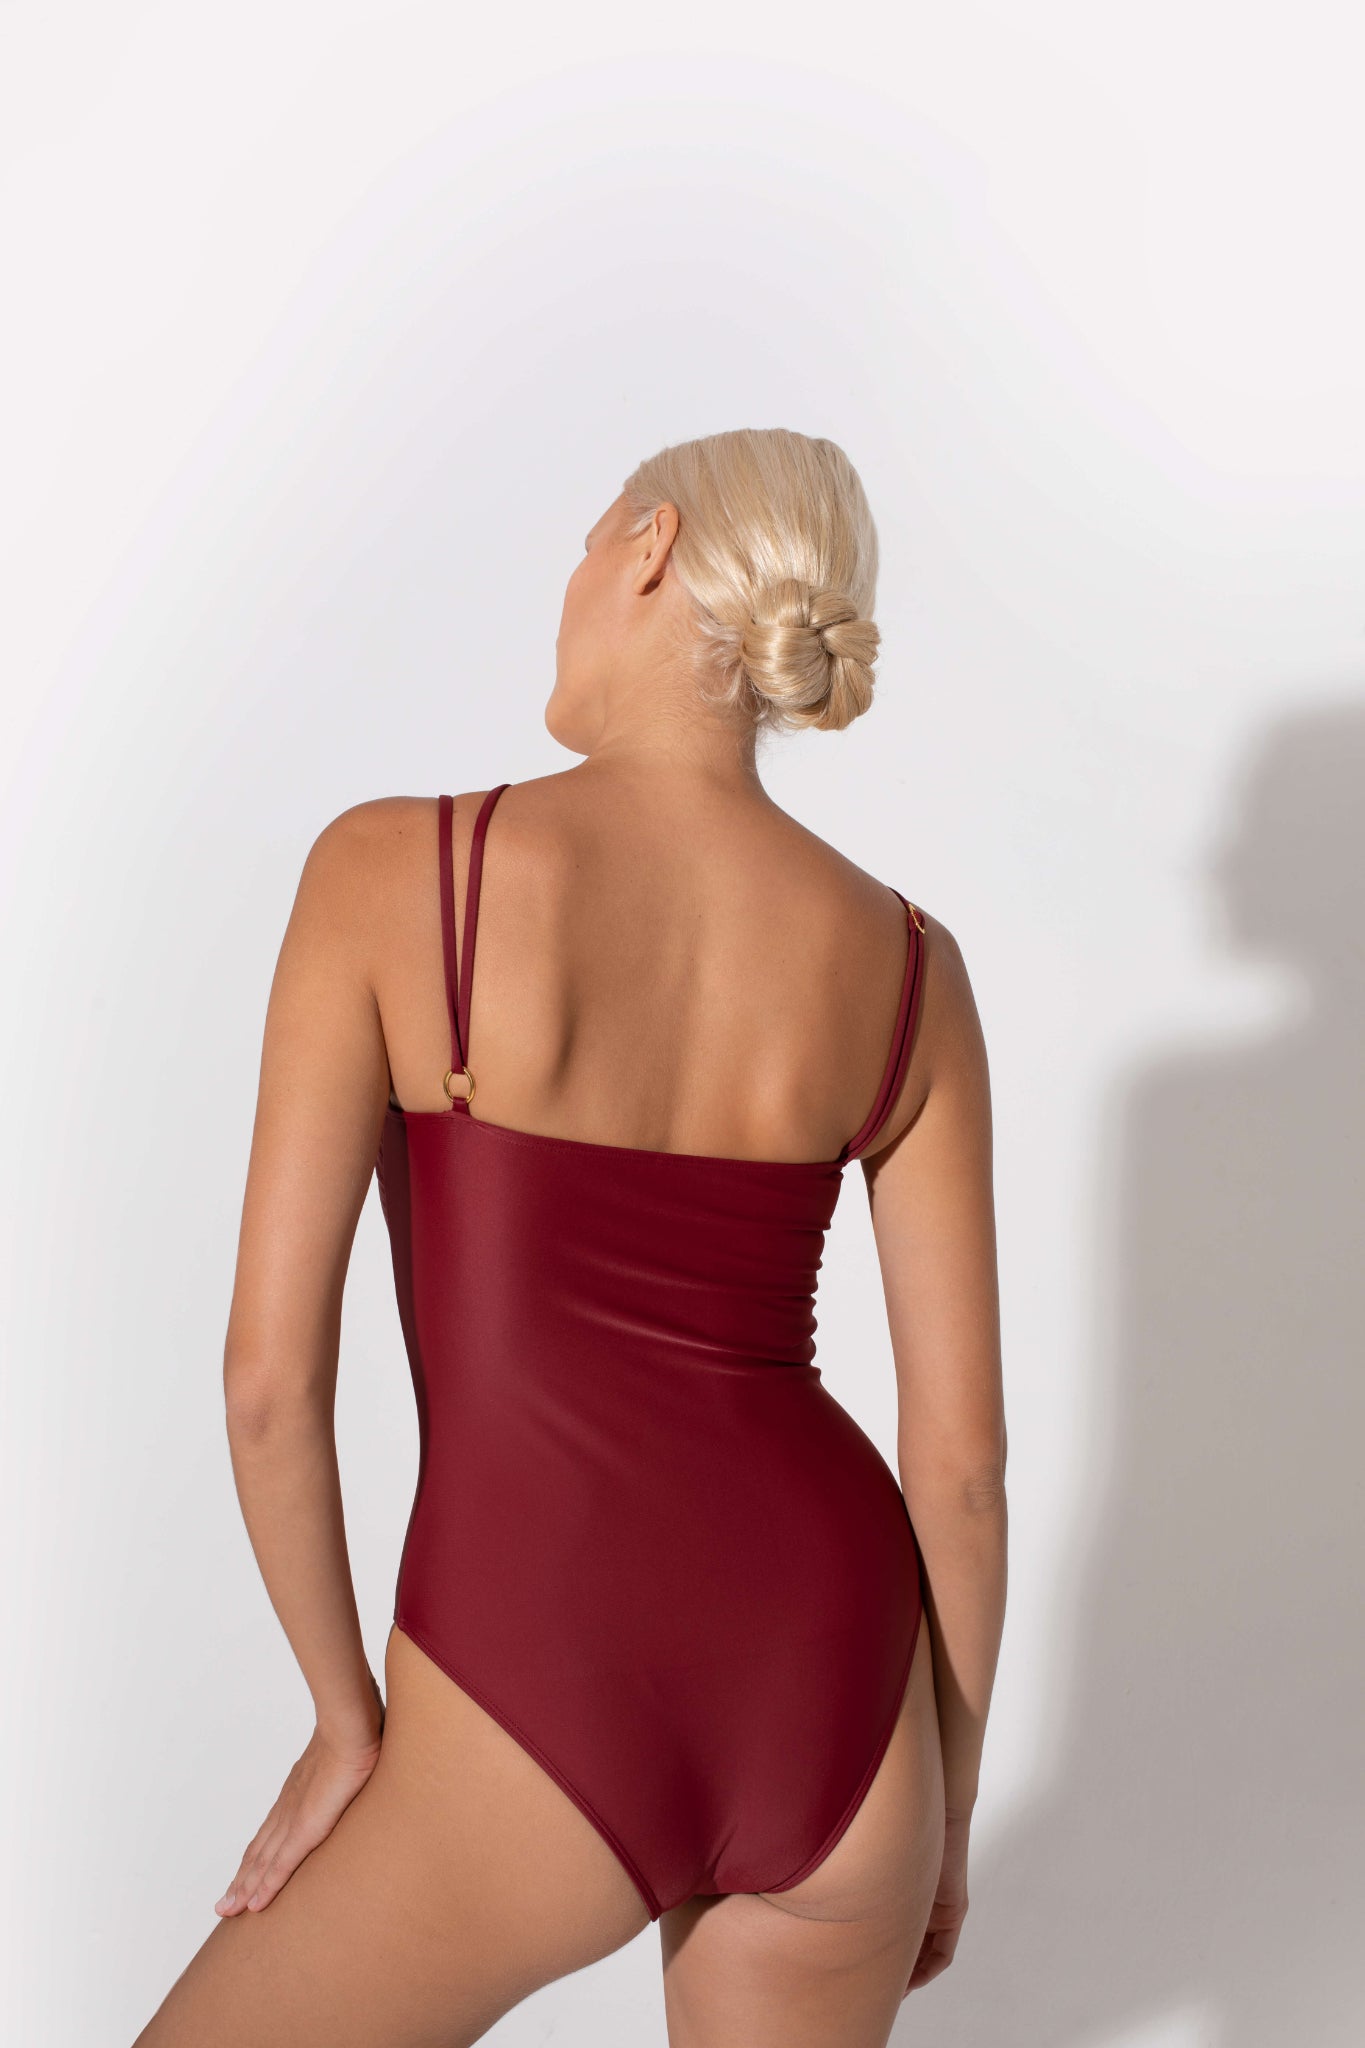 luxury swimwear for curvy women made from soft fabrics that feels like shapewear